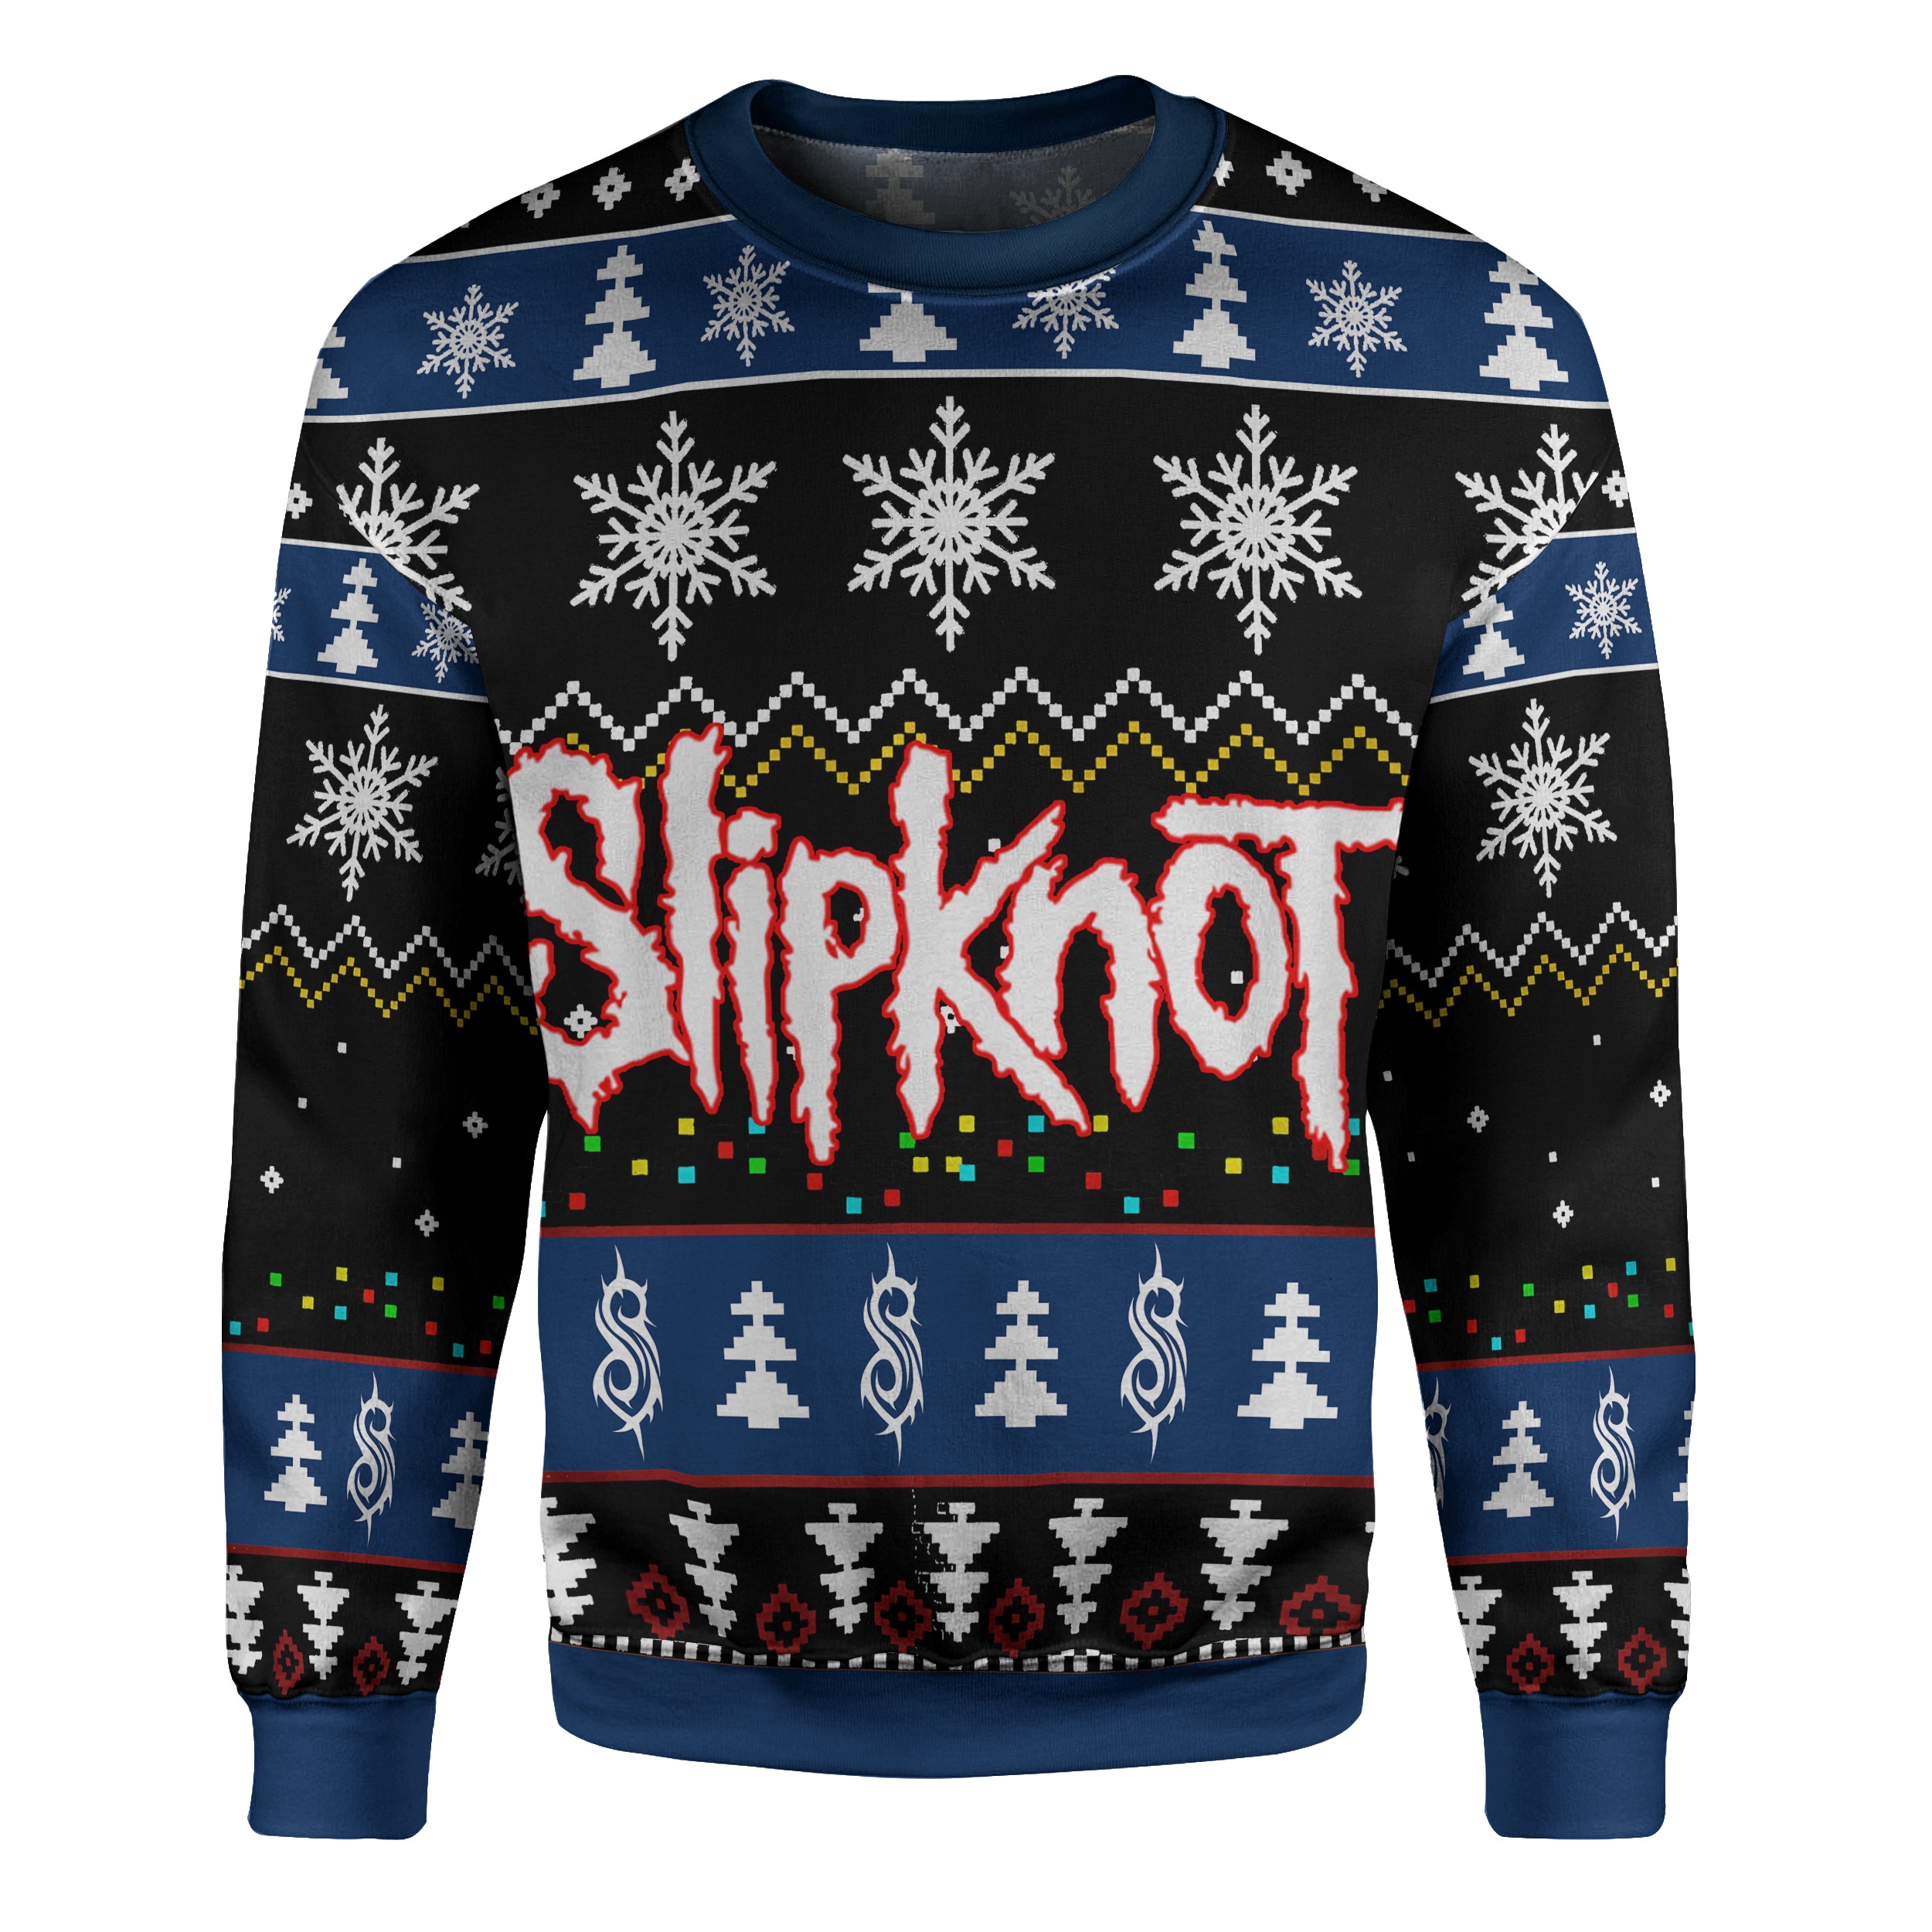 Slipknot ugly 3d hot sweatshirt